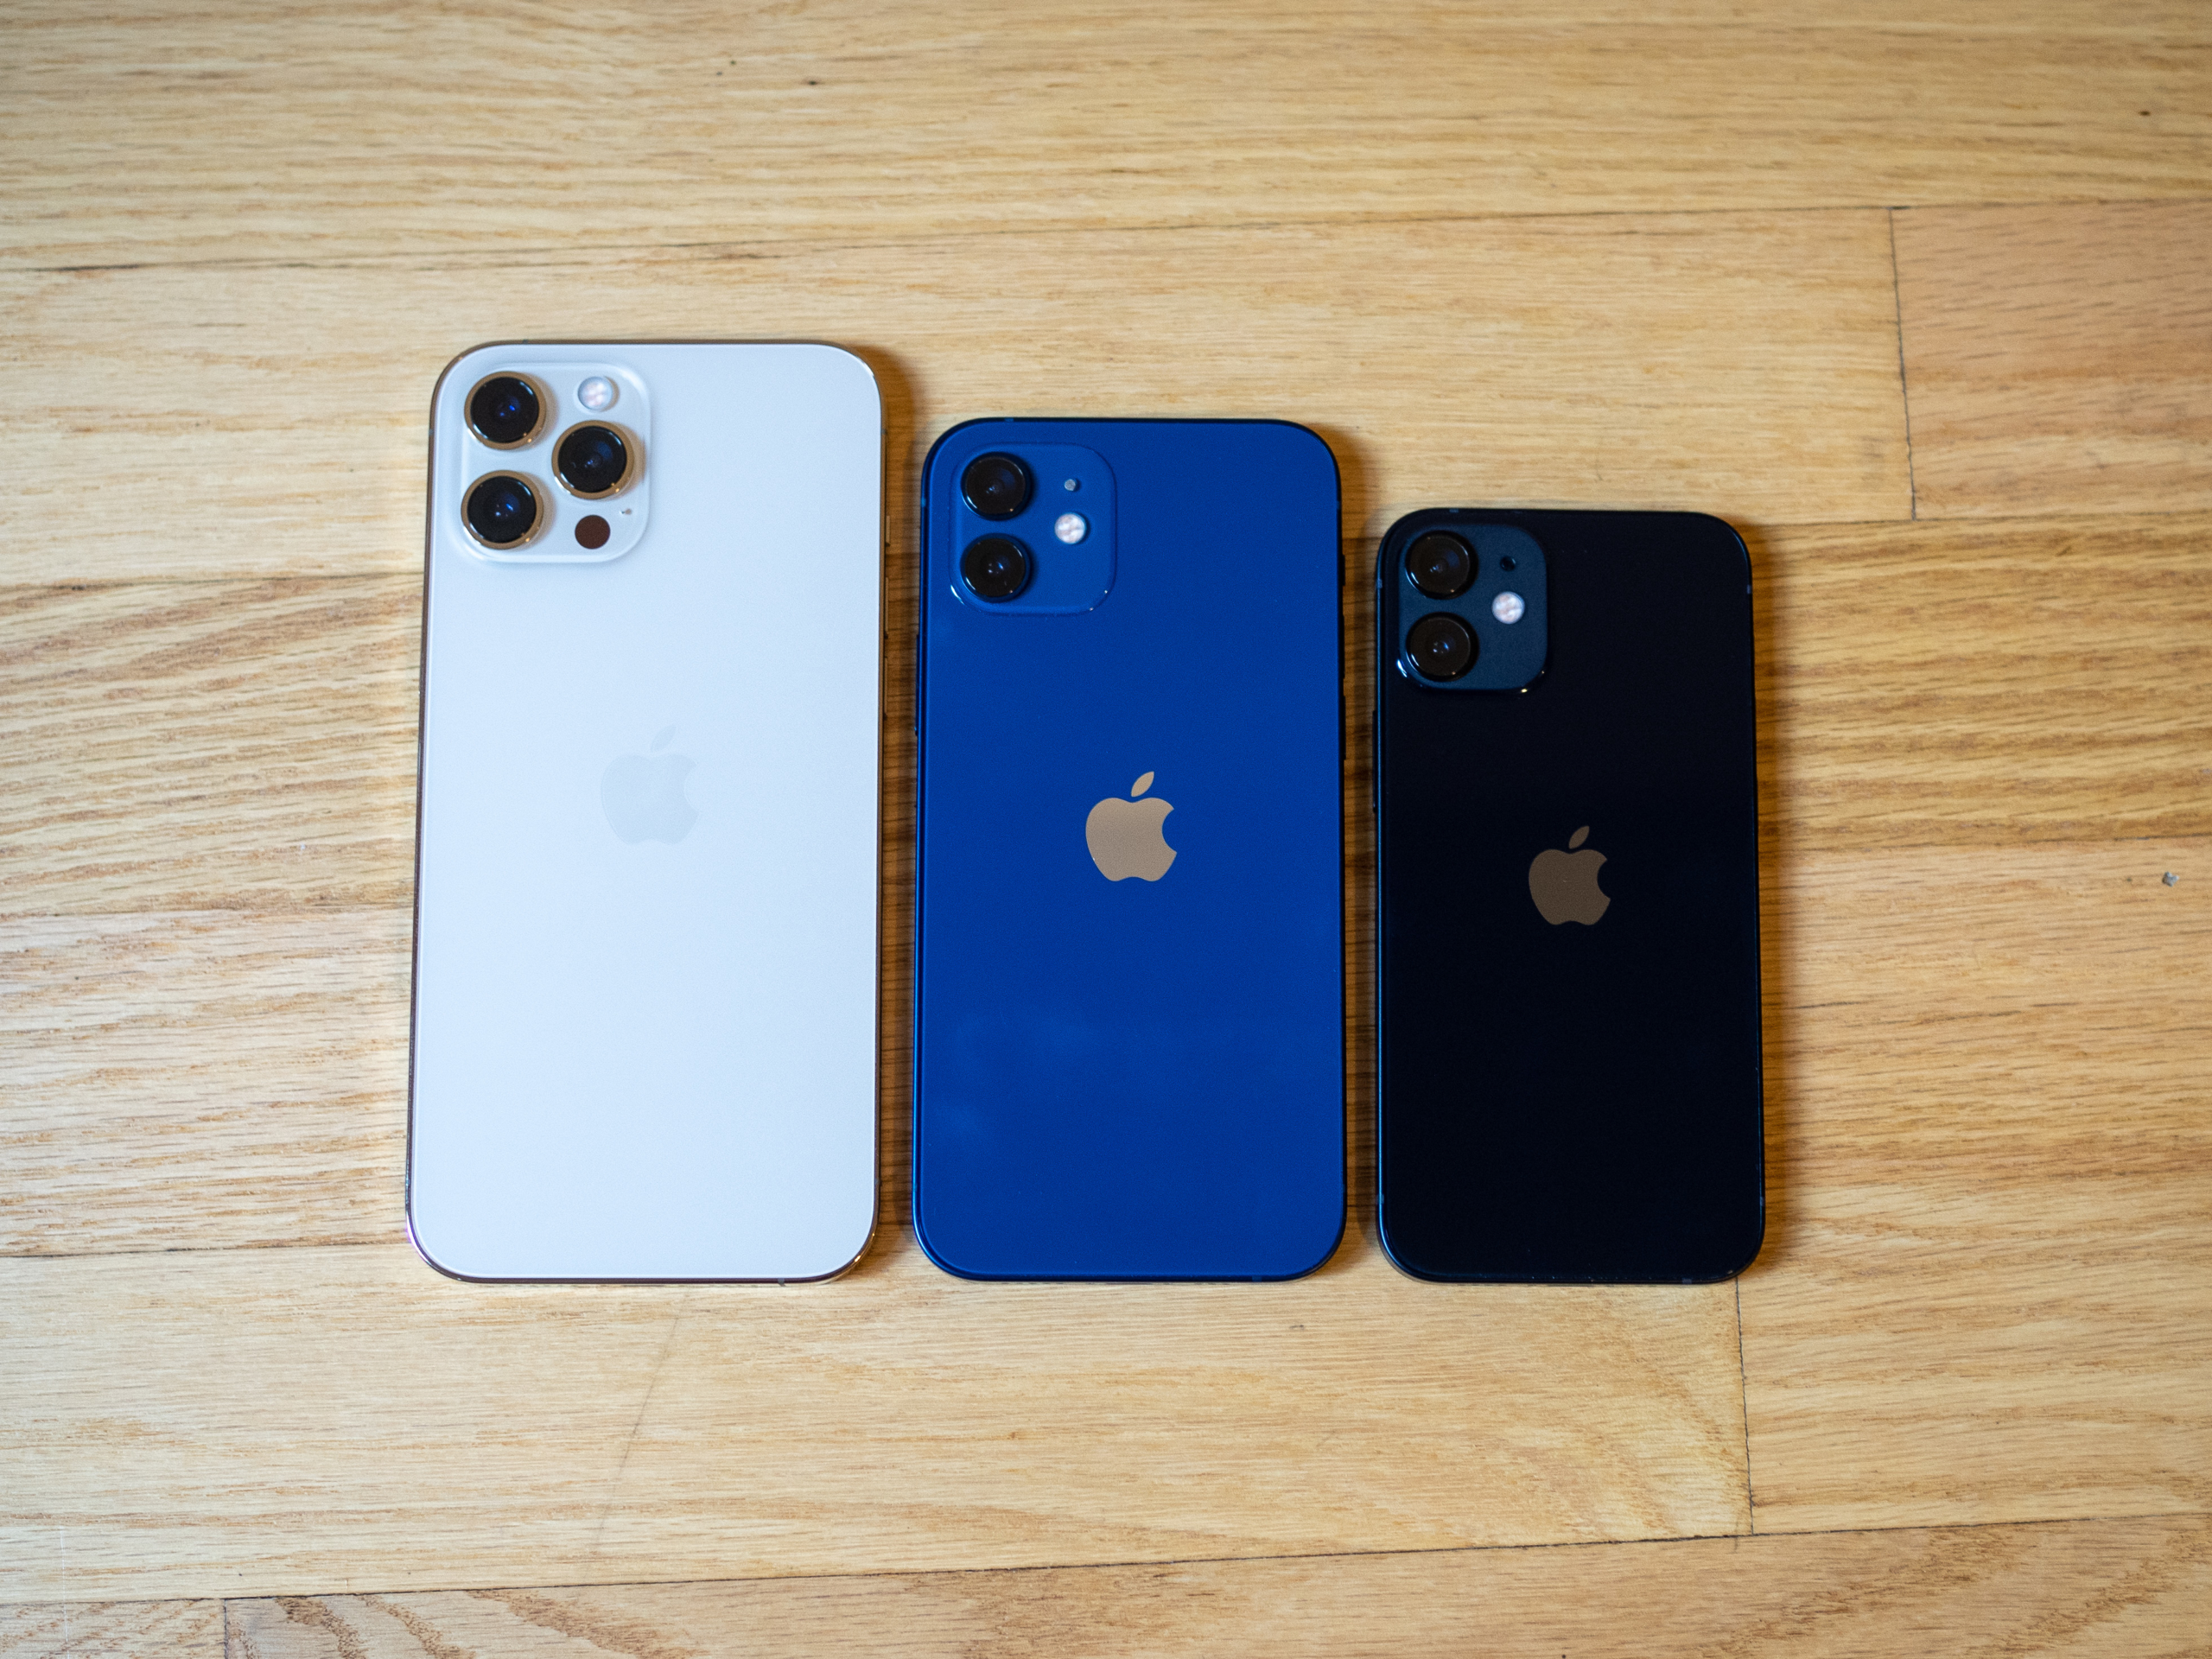 iPhone 12 mini vs iPhone SE 2: What's the best mini Apple phone?